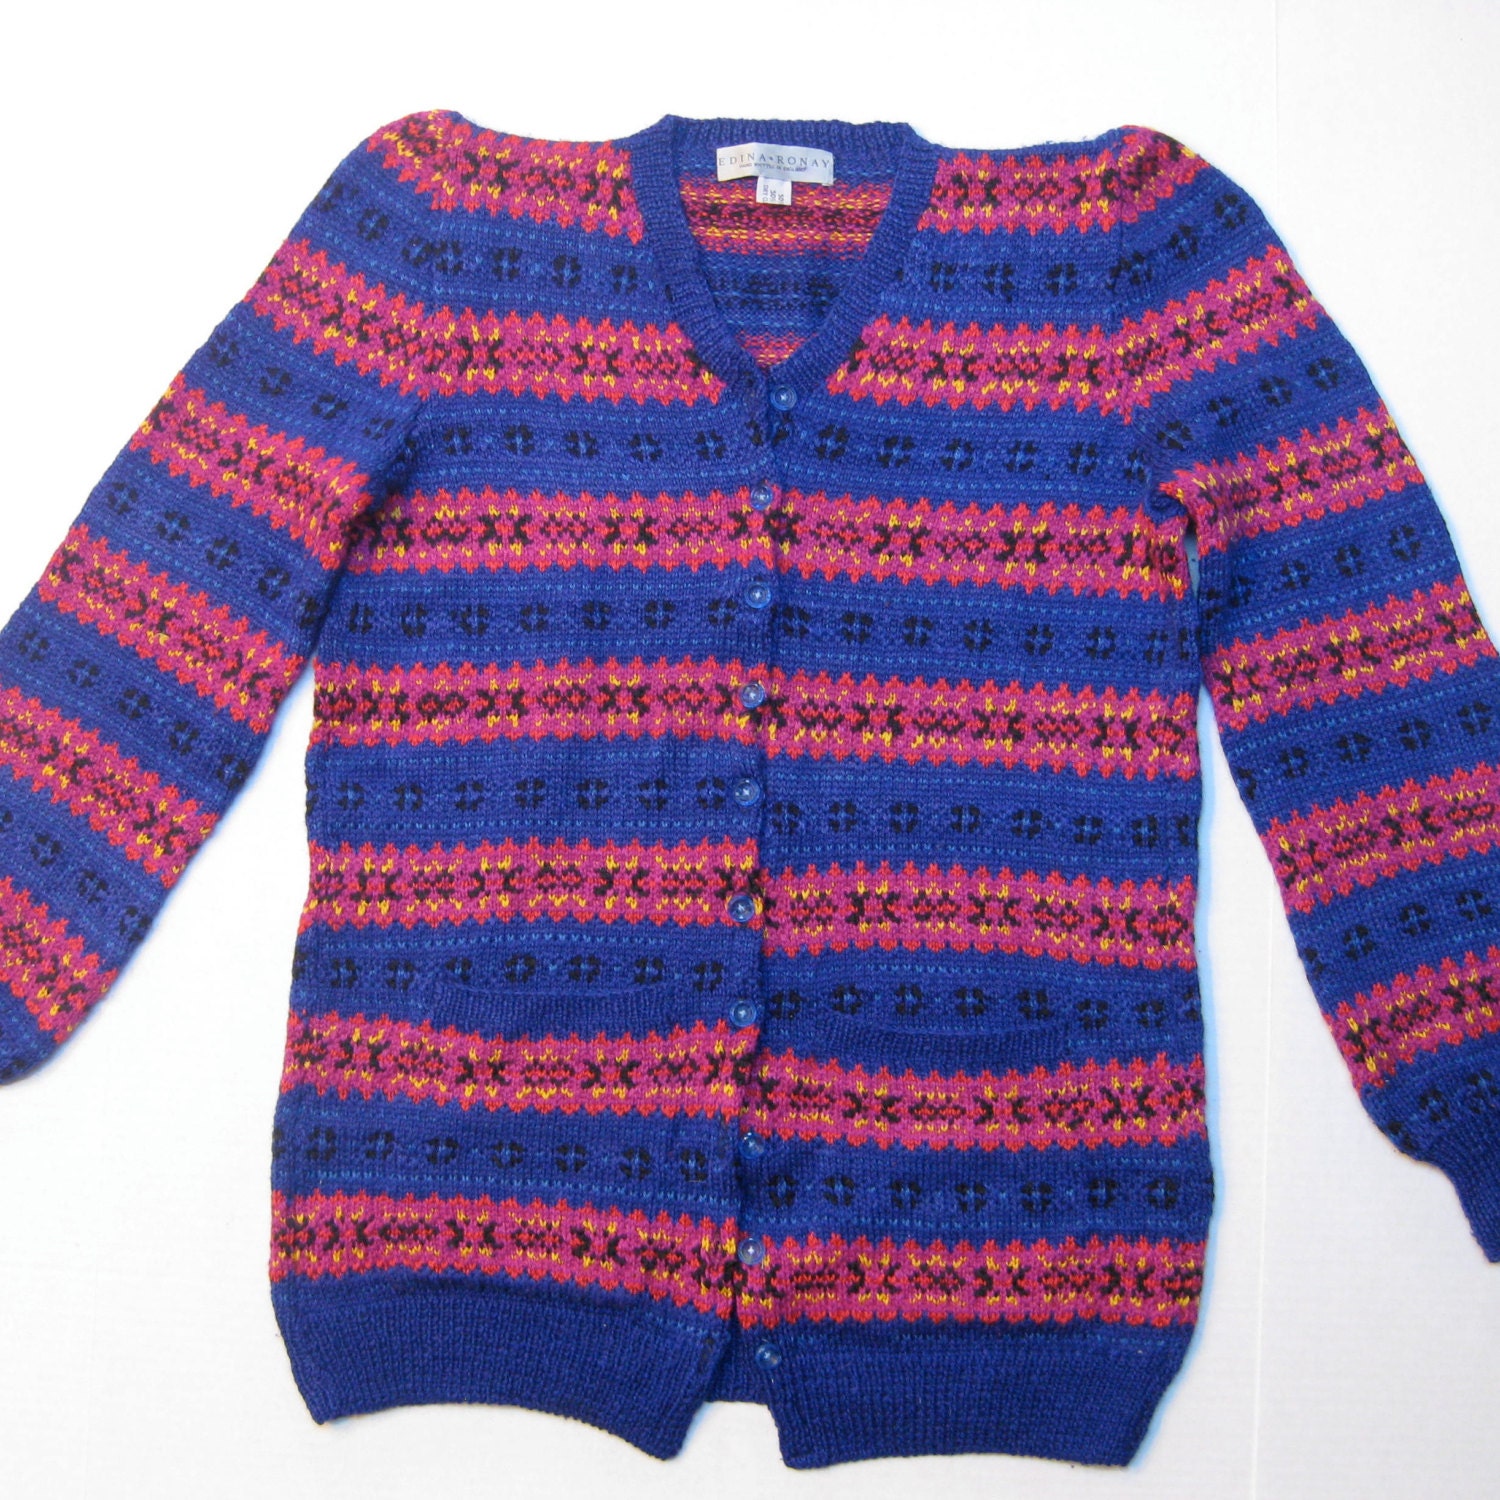 Edina Ronay Vintage Silk and Wool Long Cardigan Sweater Hand